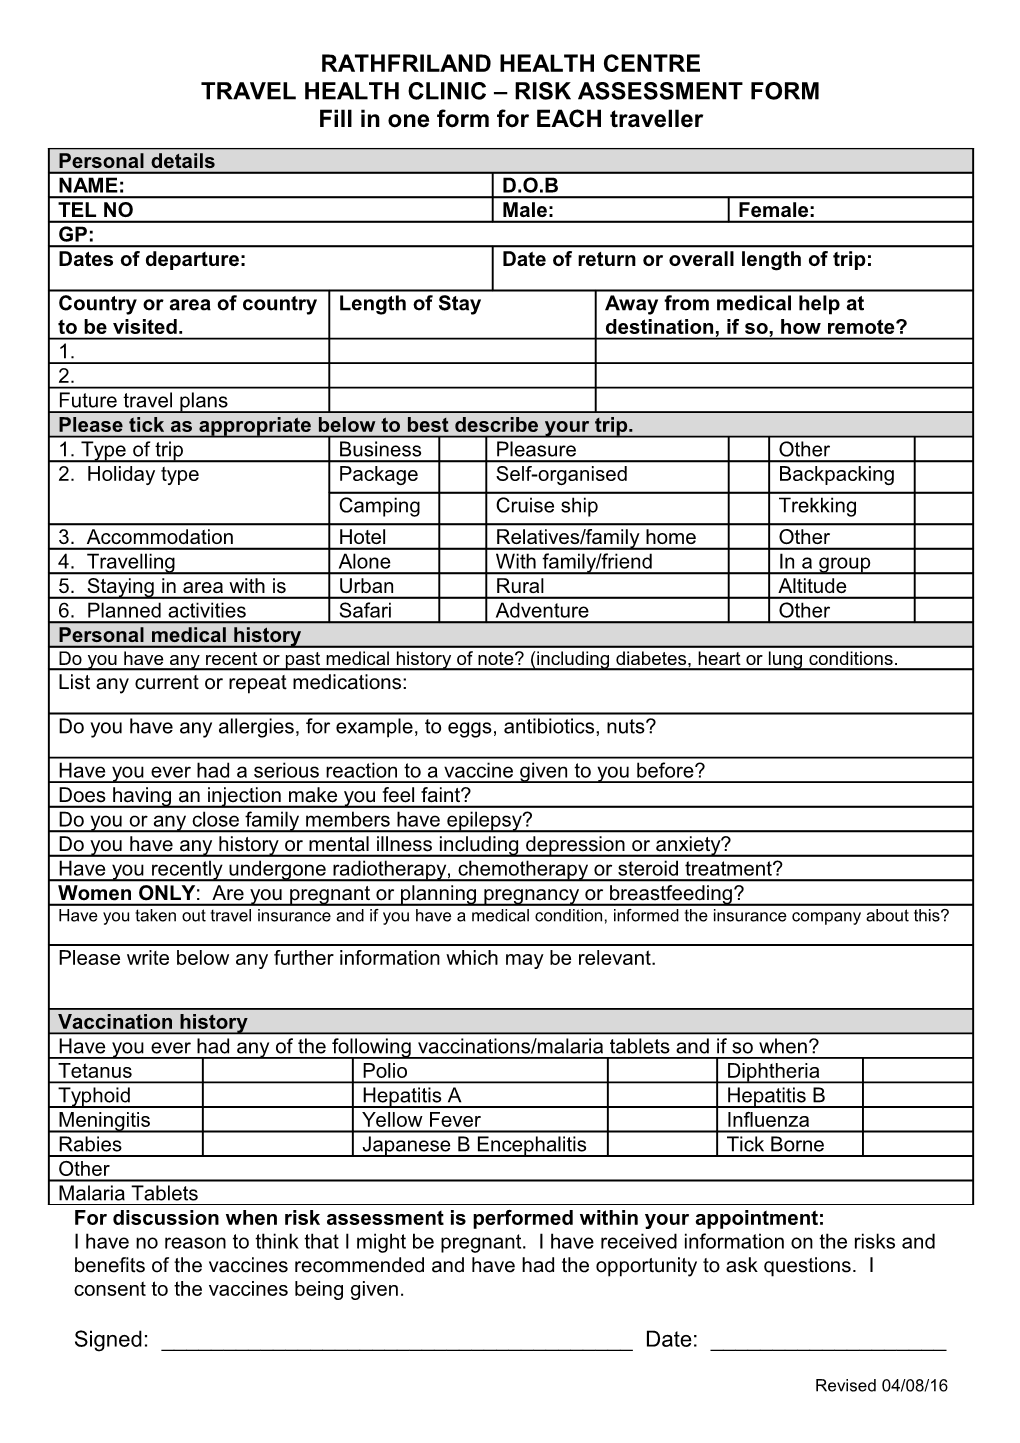 Travel Health Clinic Risk Assessment Form